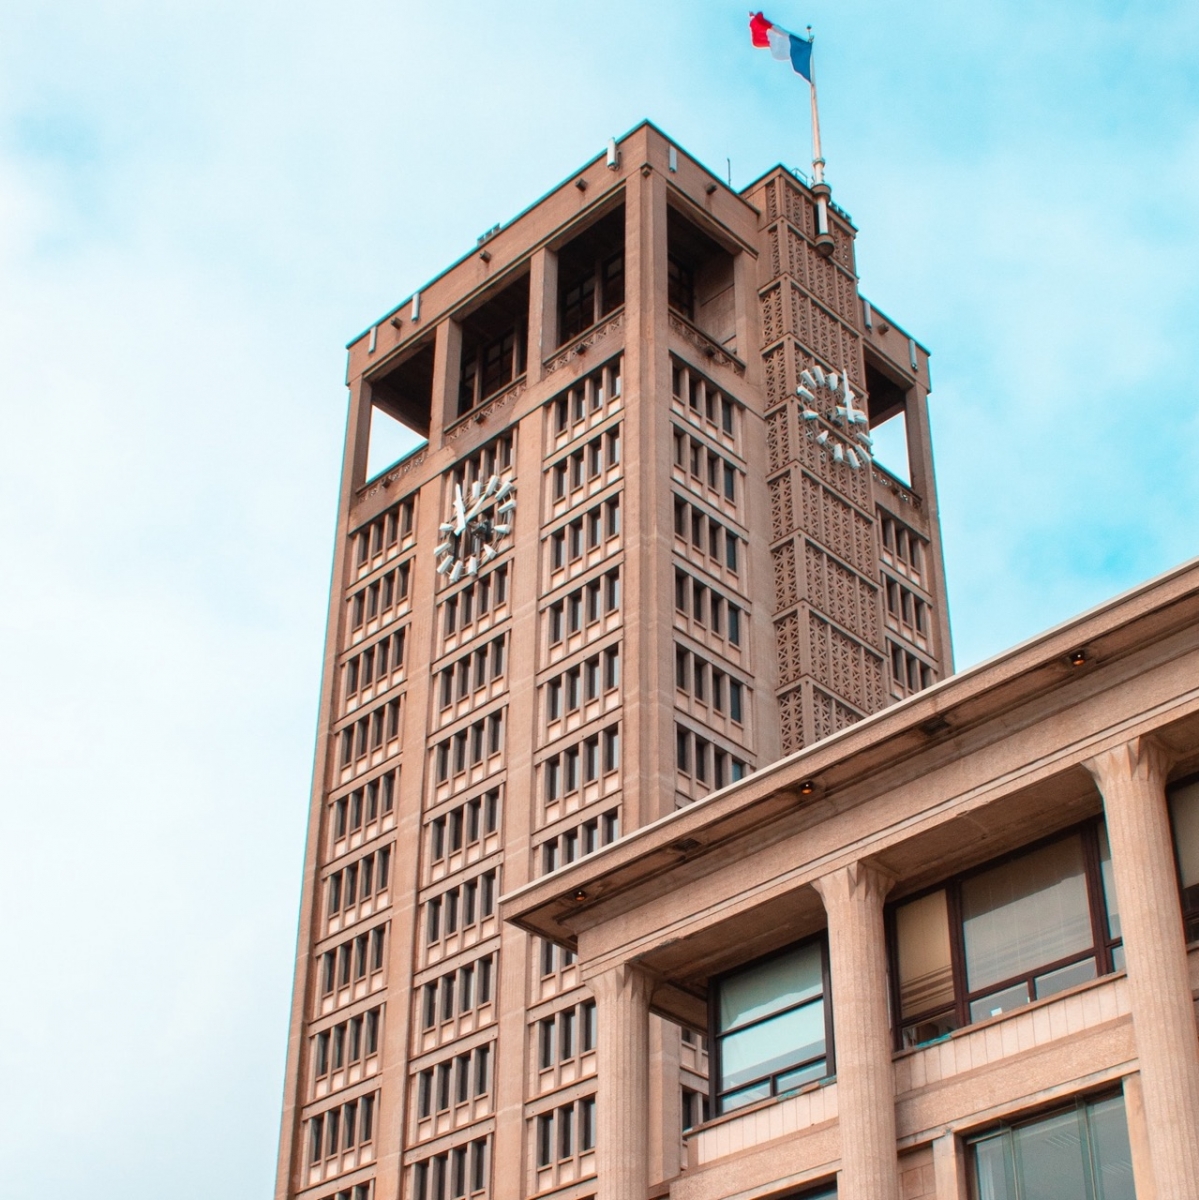 Enorme torre del municipio a le Havre